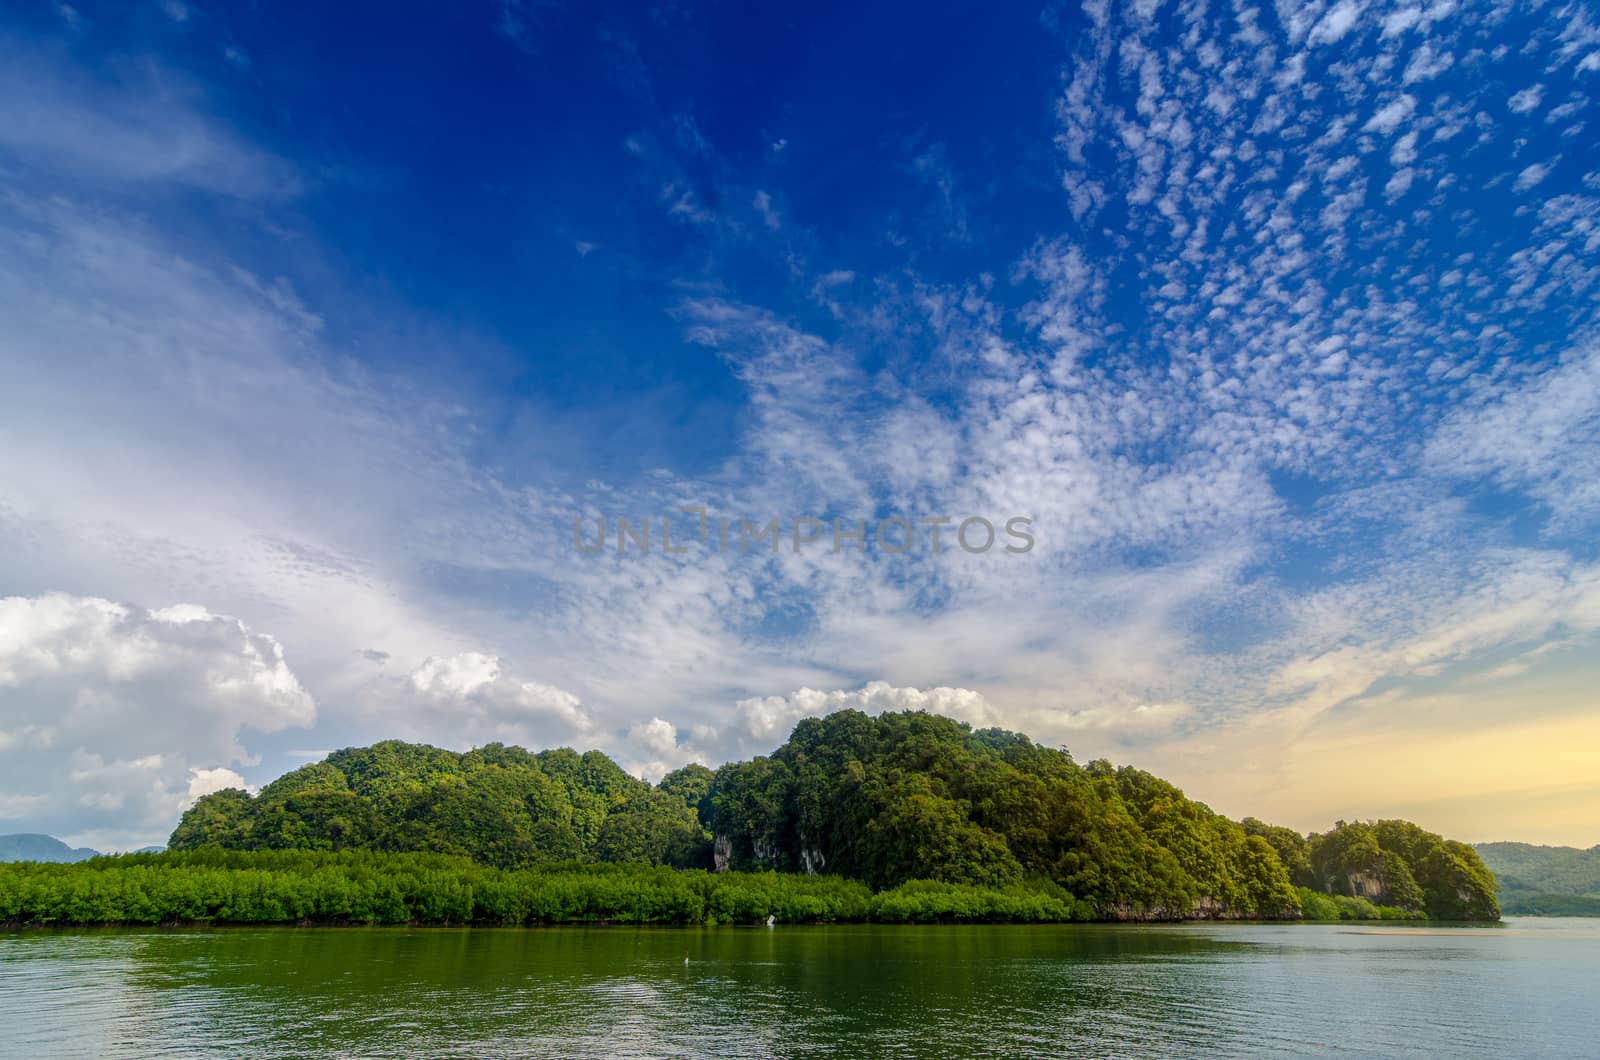 Thailand Krabi travel Island In the bright blue days  Space by sarayut_thaneerat